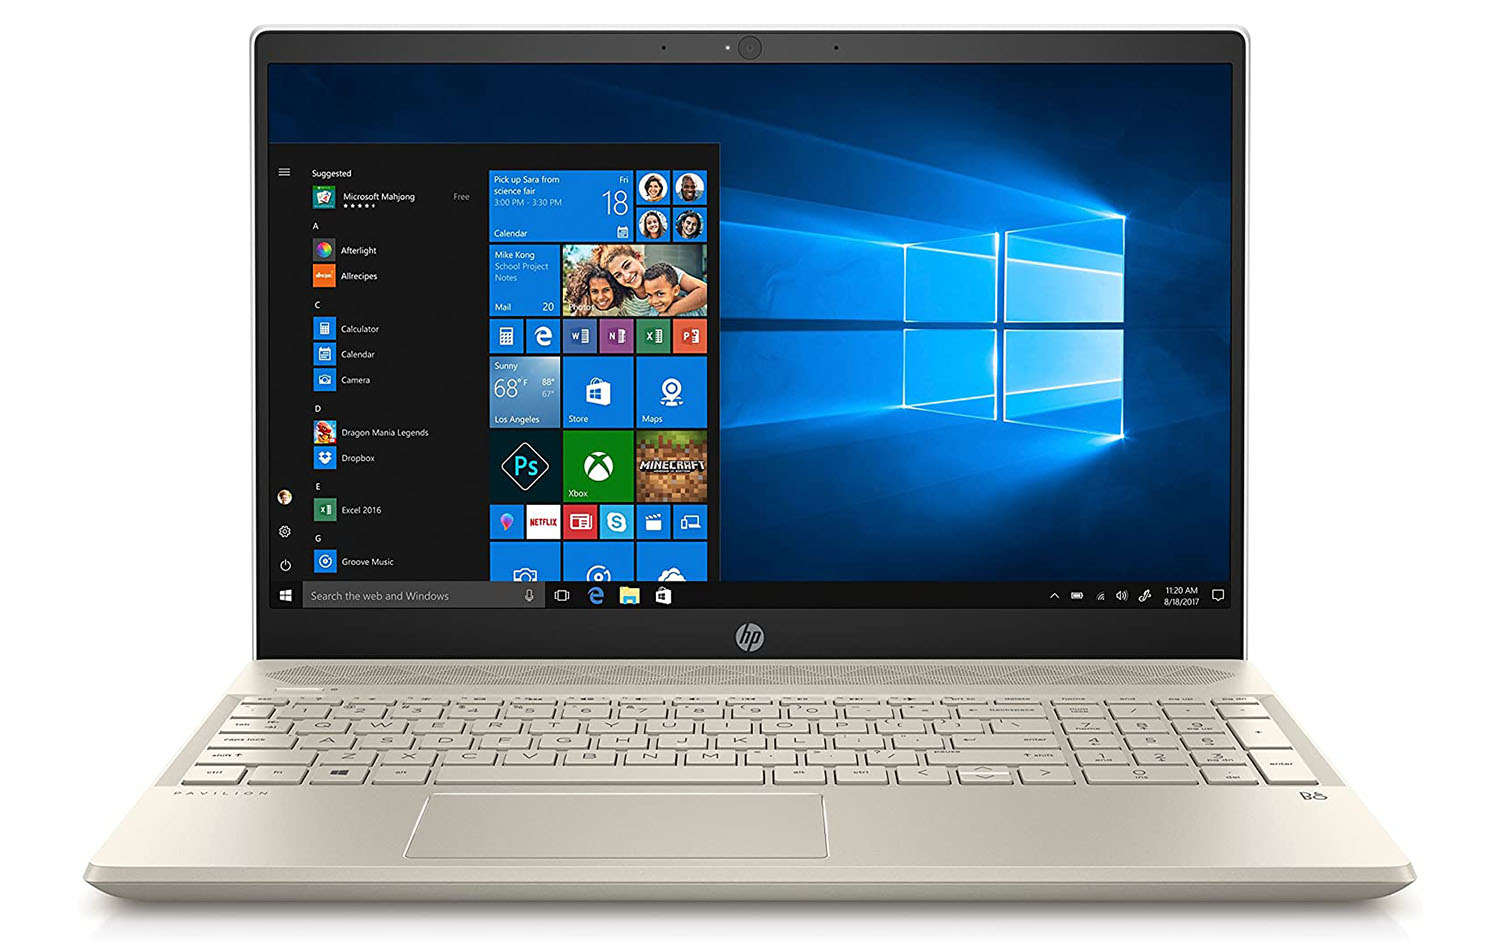 HP Pavilion Laptop 15 cs0051wm Intel Core i5 8th Gen 8GB RAM 1TB HDD Touchscreen Windows 10 Home